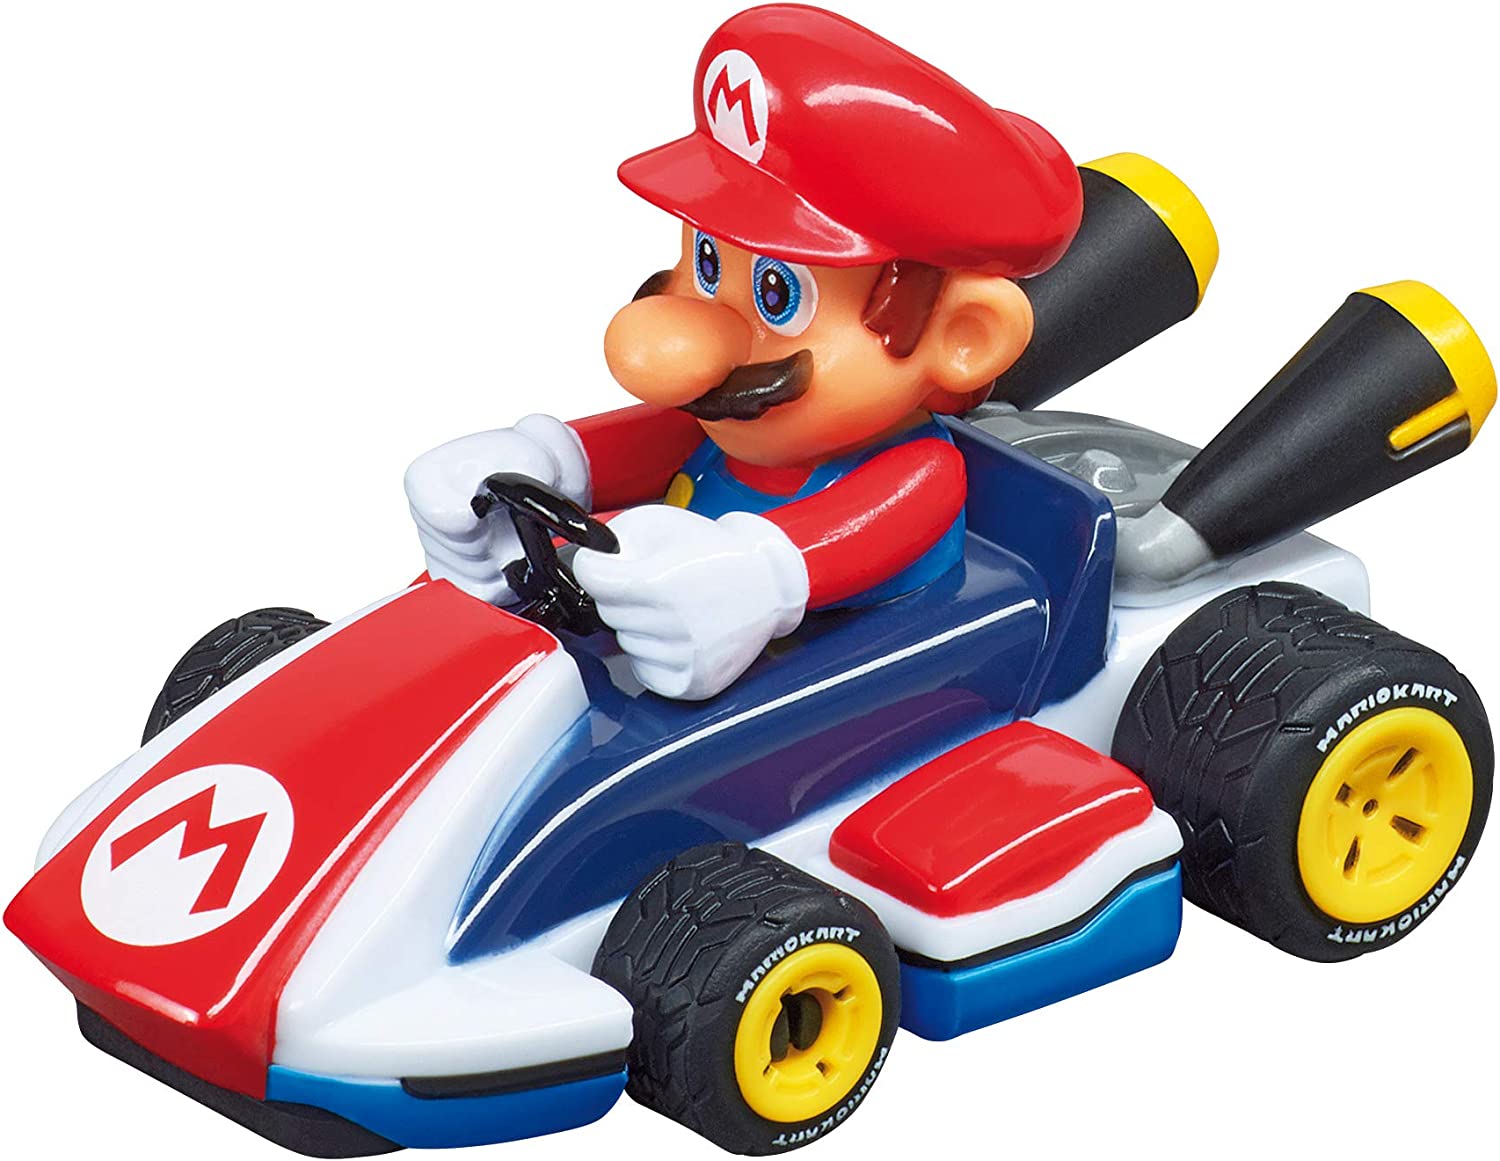 Carrera First Mario Kart Beginner Slot Car Race Track Set Featuring Mario Versus Yoshi - image 6 of 7